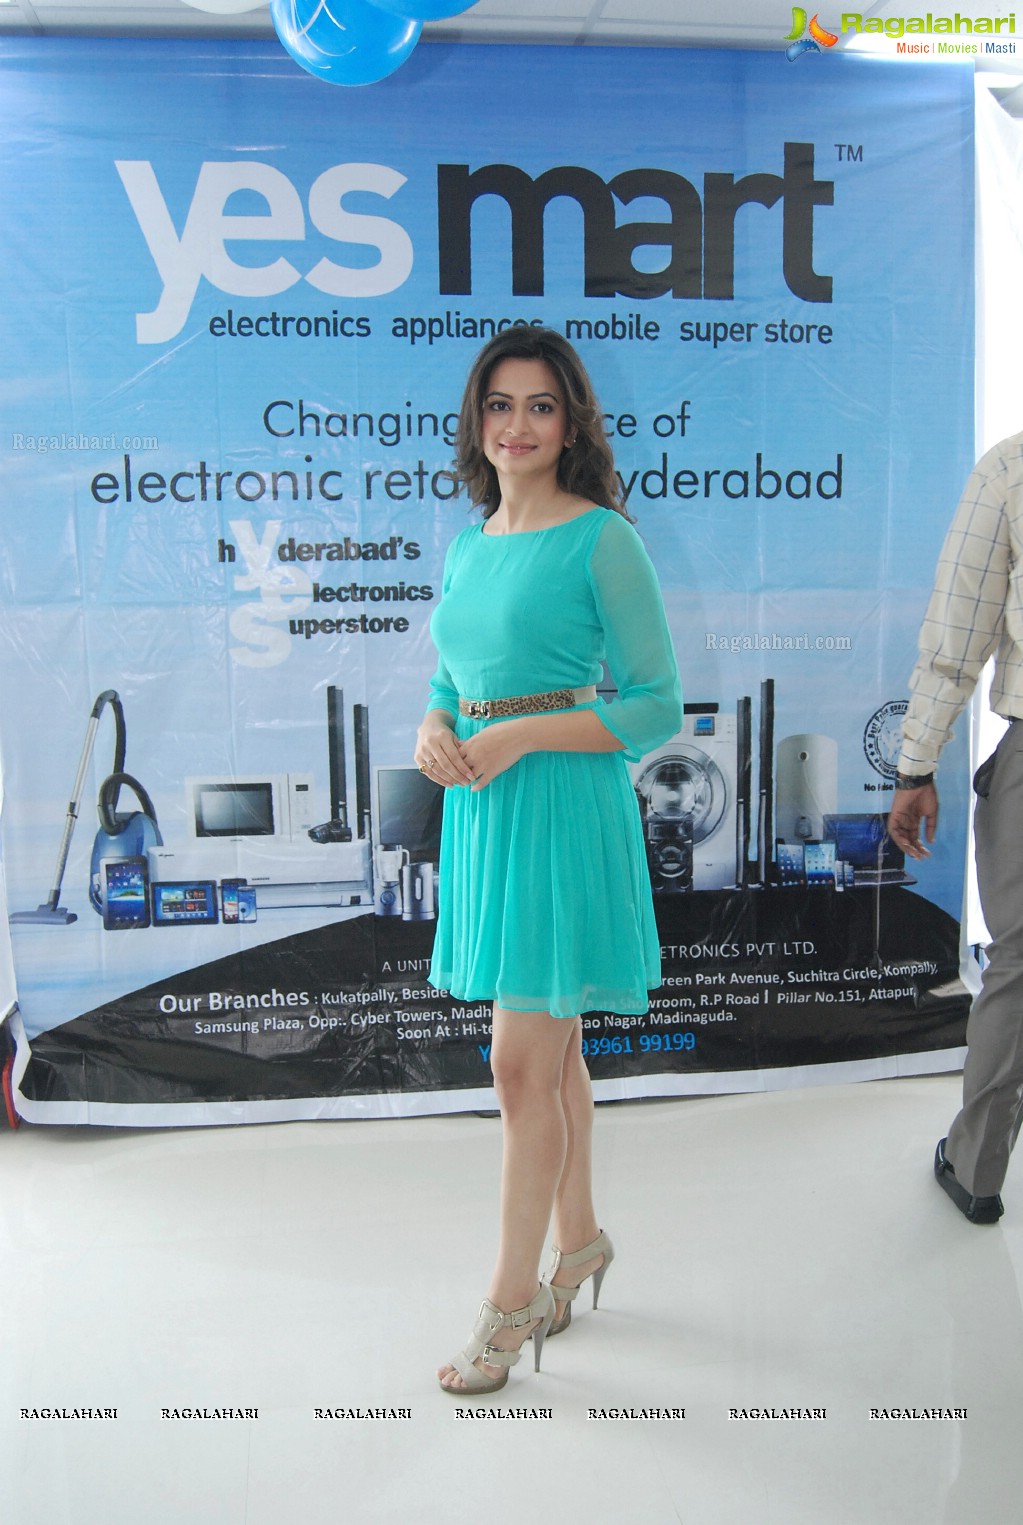 Kriti Kharbanda inaugurates Yes Mart Superstore at Kompally, Hyderabad